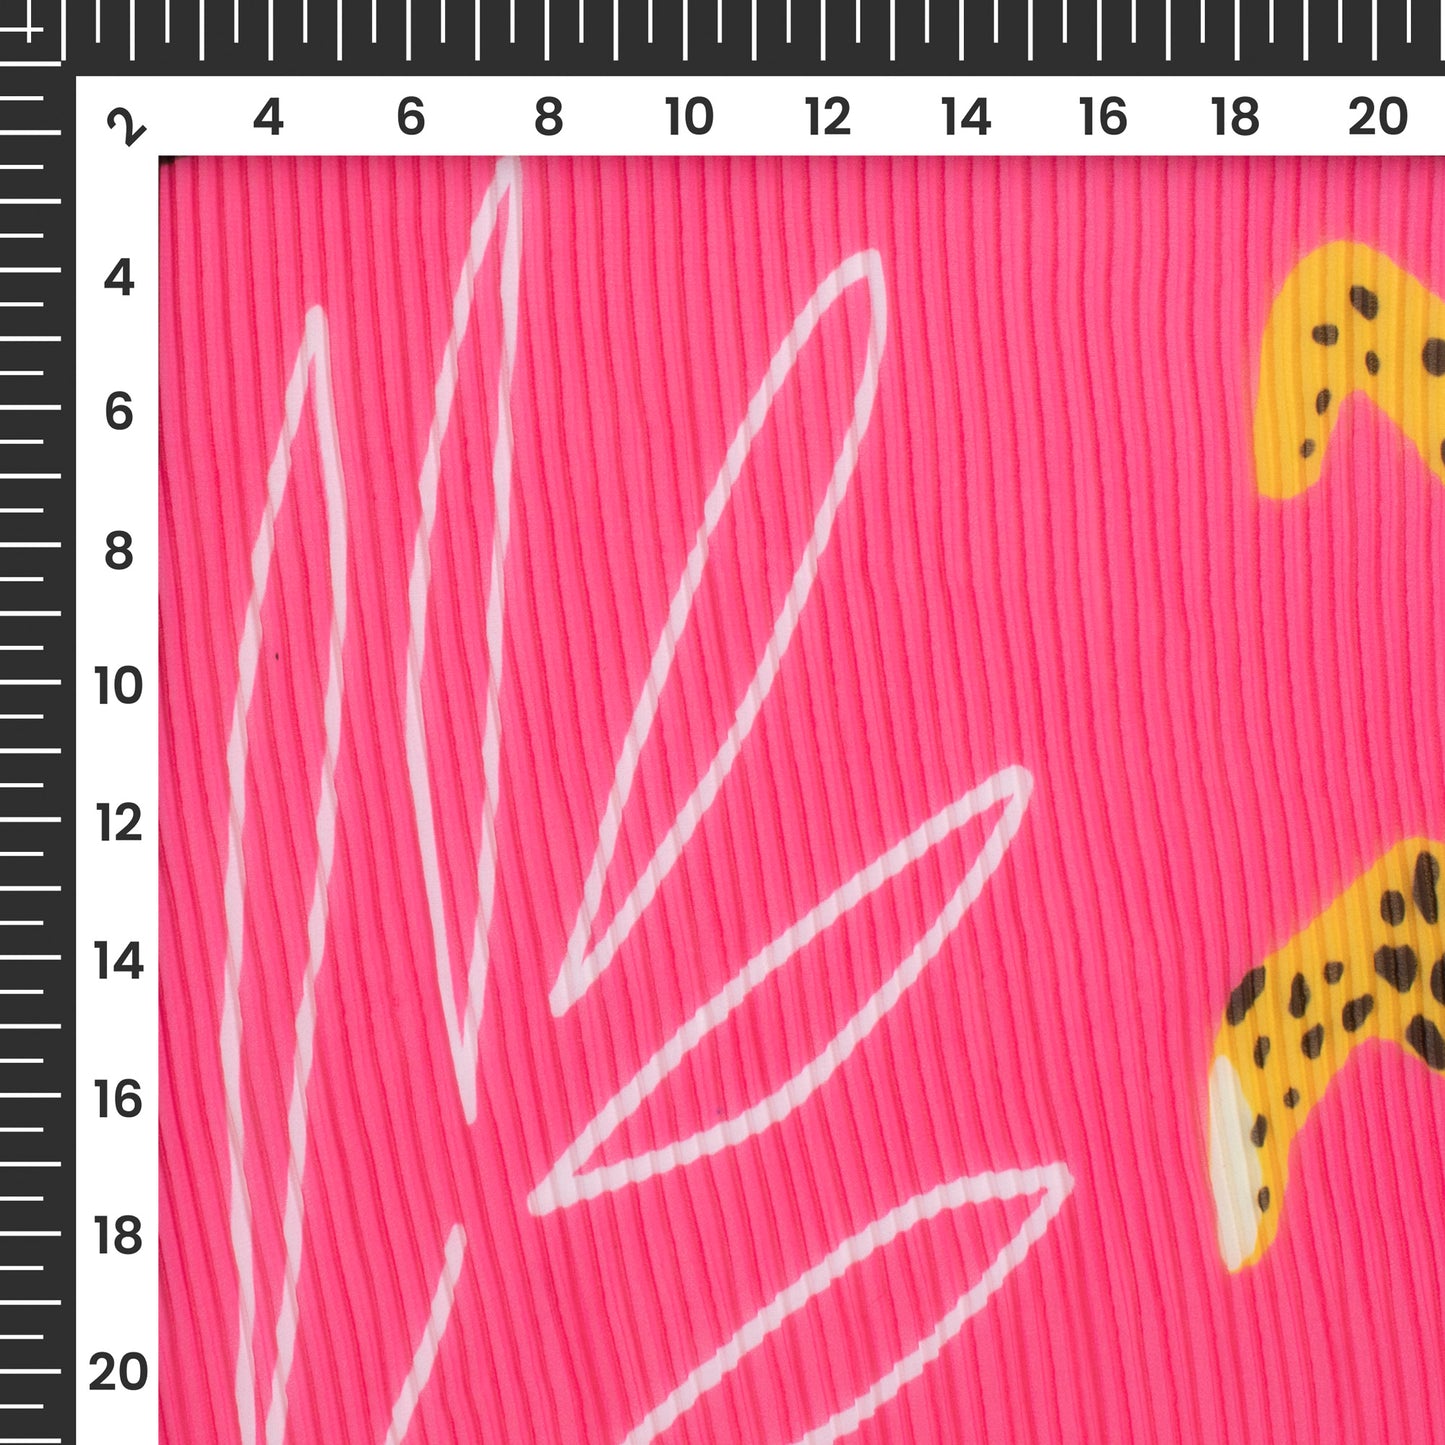 Deep Pink Leopard Digital Print Georgette Pleated Fabric